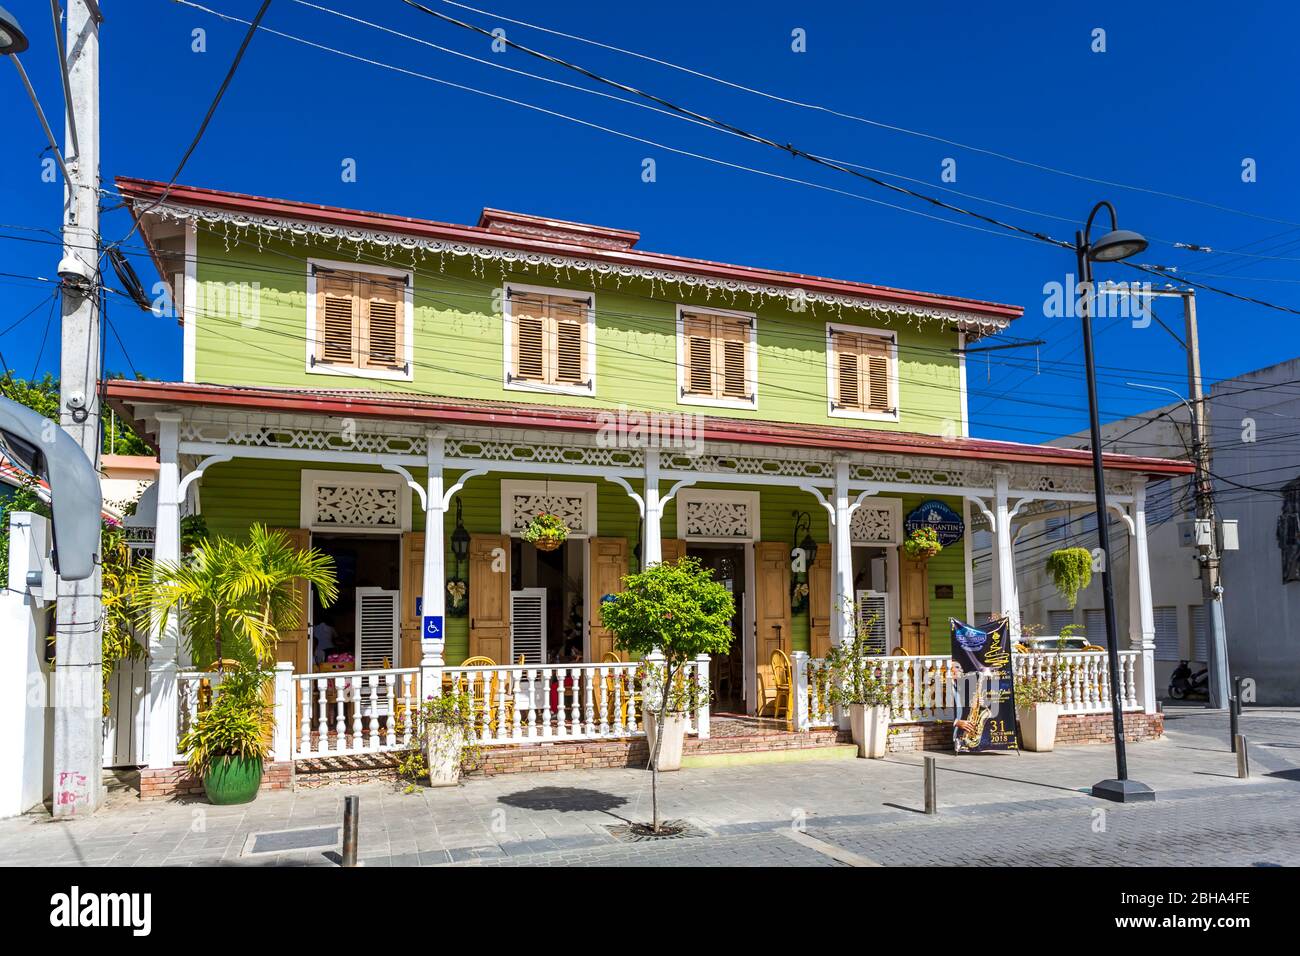 Restaurant El Bergantin, Viktorianische Häuser, Zentrum, Puerto Plata, Dominikanische Republik, Große Antillen, Karibik, Atlantik, Mittelamerika Stock Photo